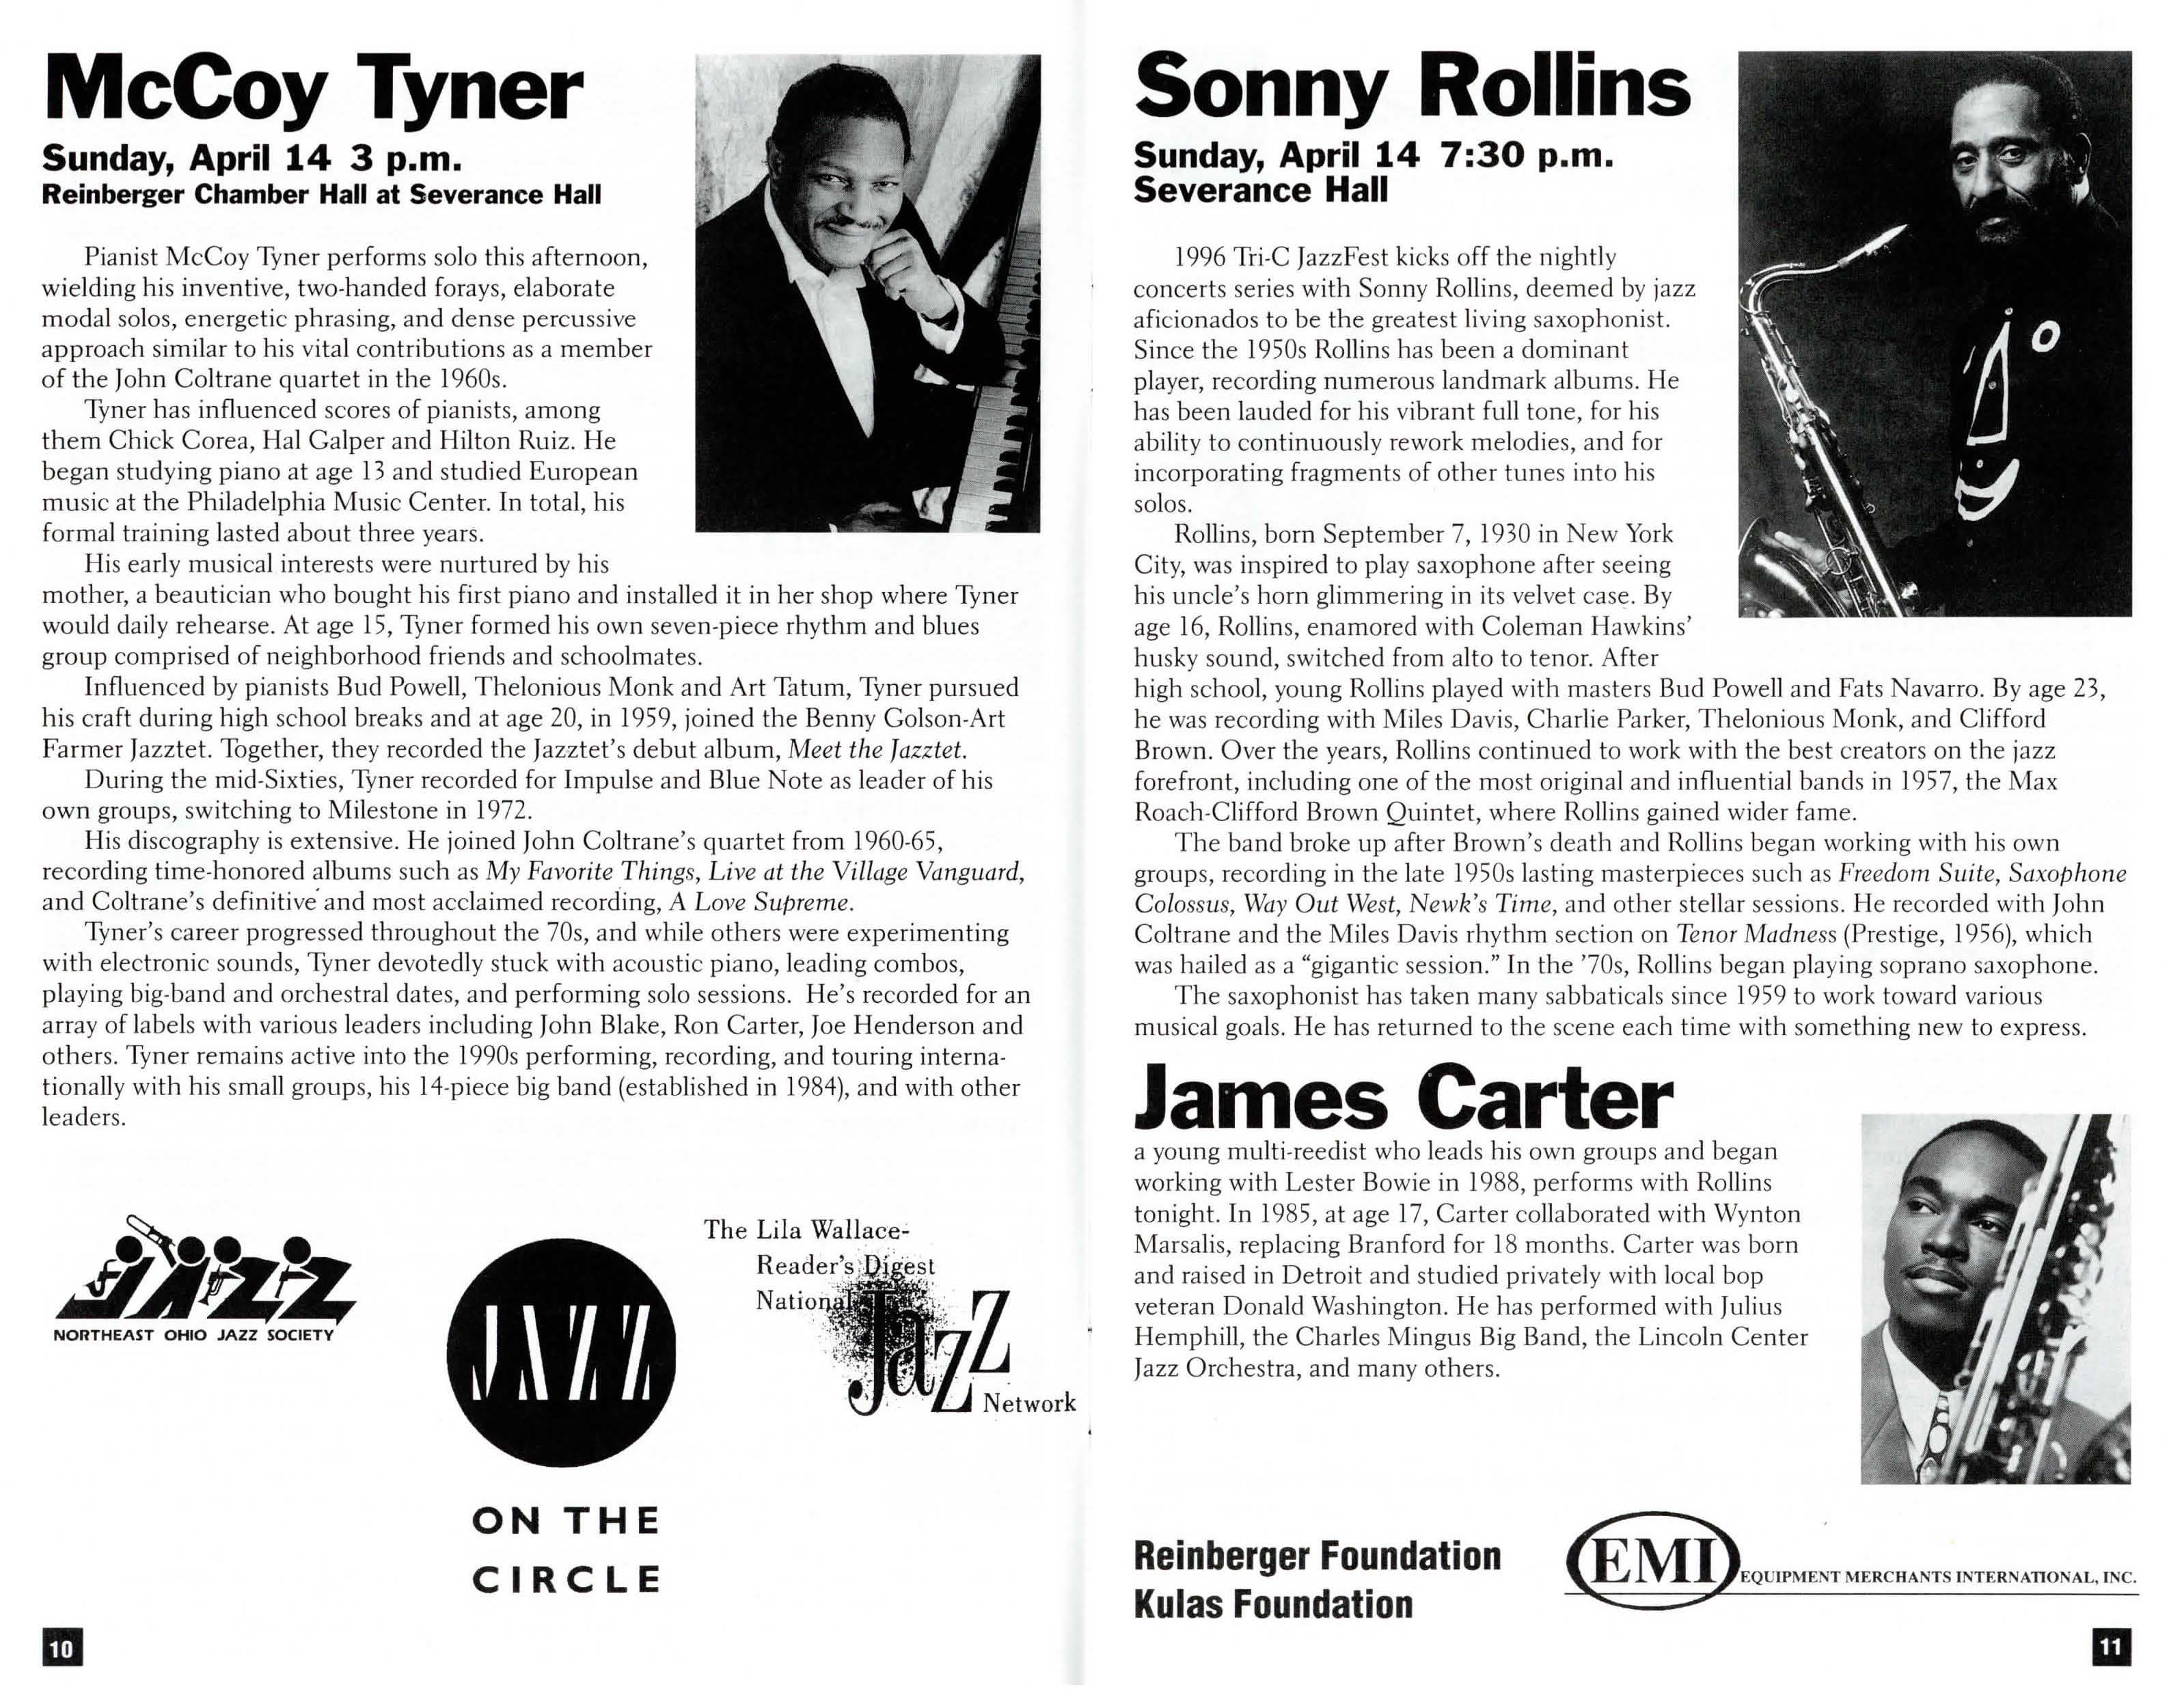 Sonny Rollins Program Bio